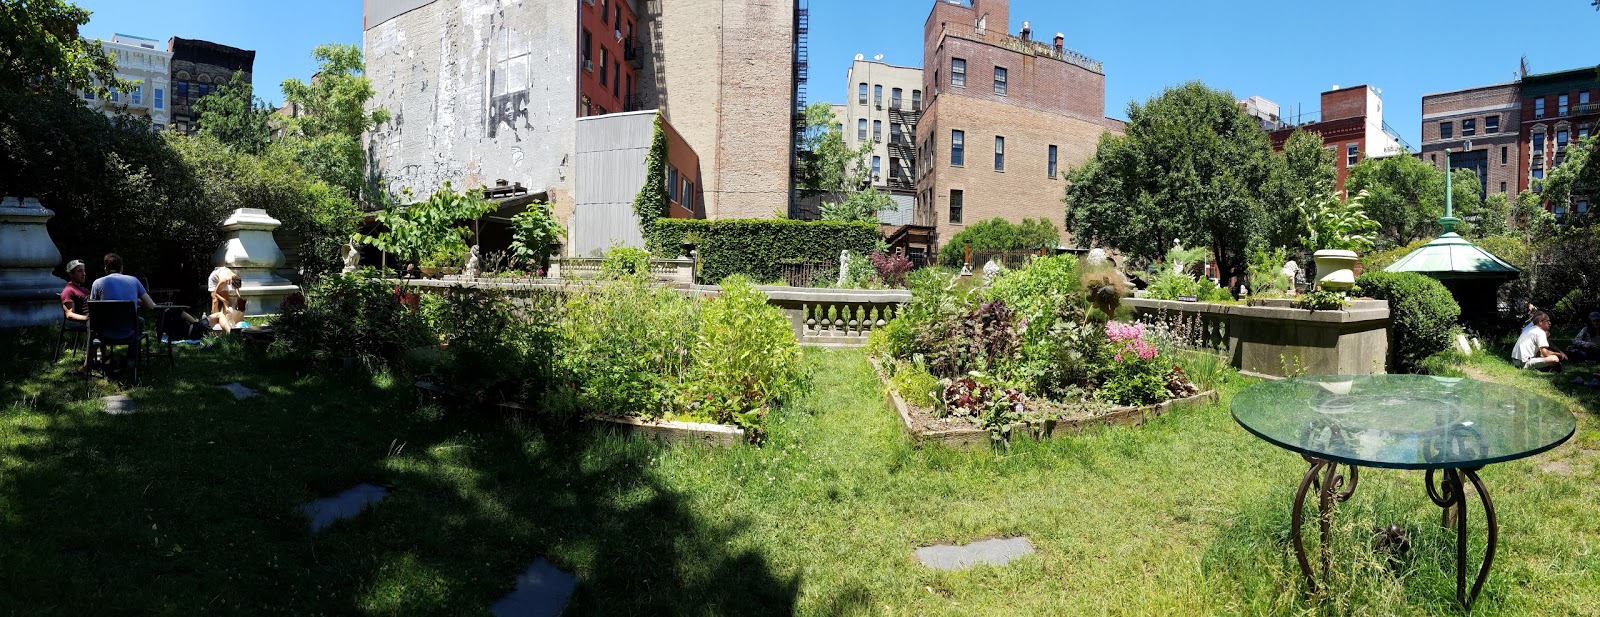 Photo of Elizabeth Street Garden in New York City, New York, United States - 1 Picture of Point of interest, Establishment, Park